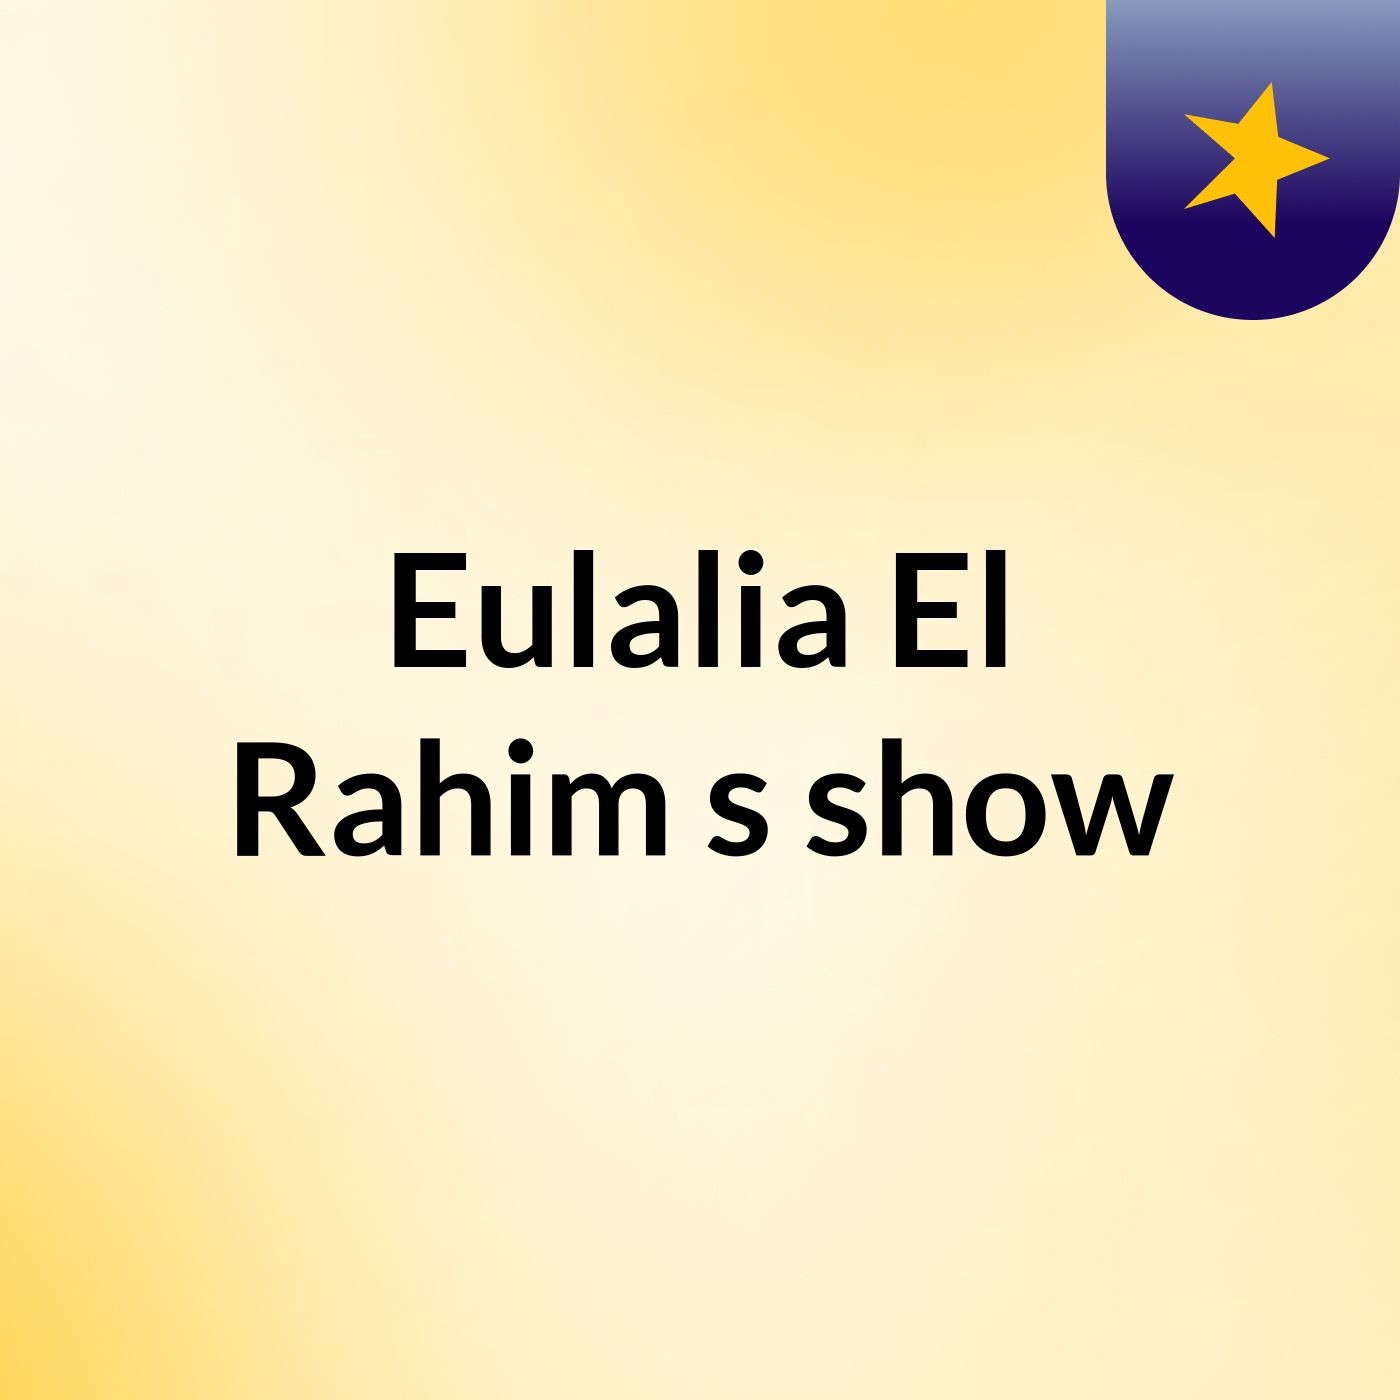 Episódio 7 - Eulalia El Rahim's show